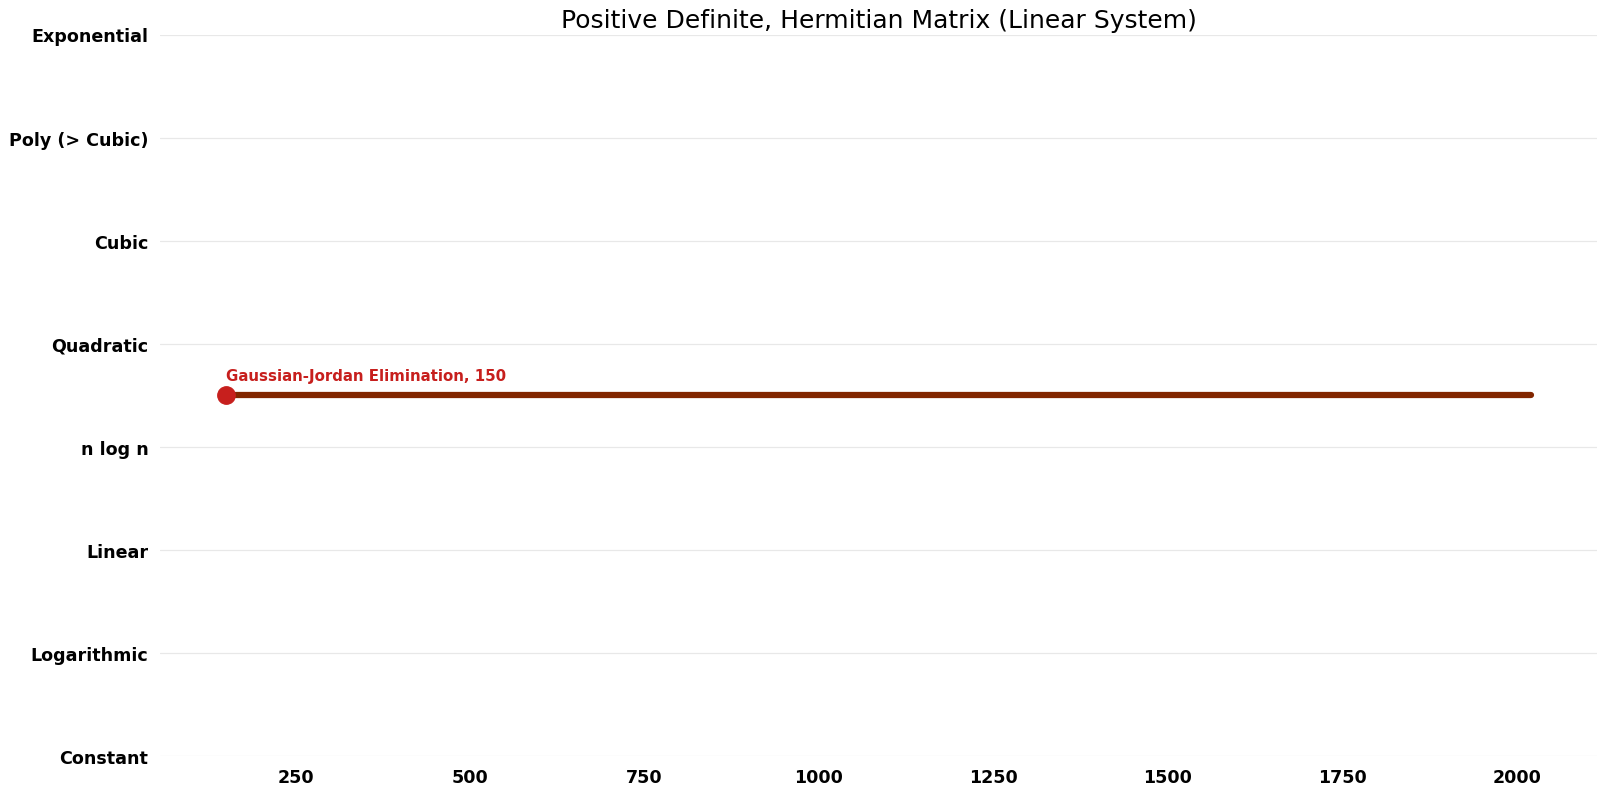 Linear System - Positive Definite, Hermitian Matrix - Time.png